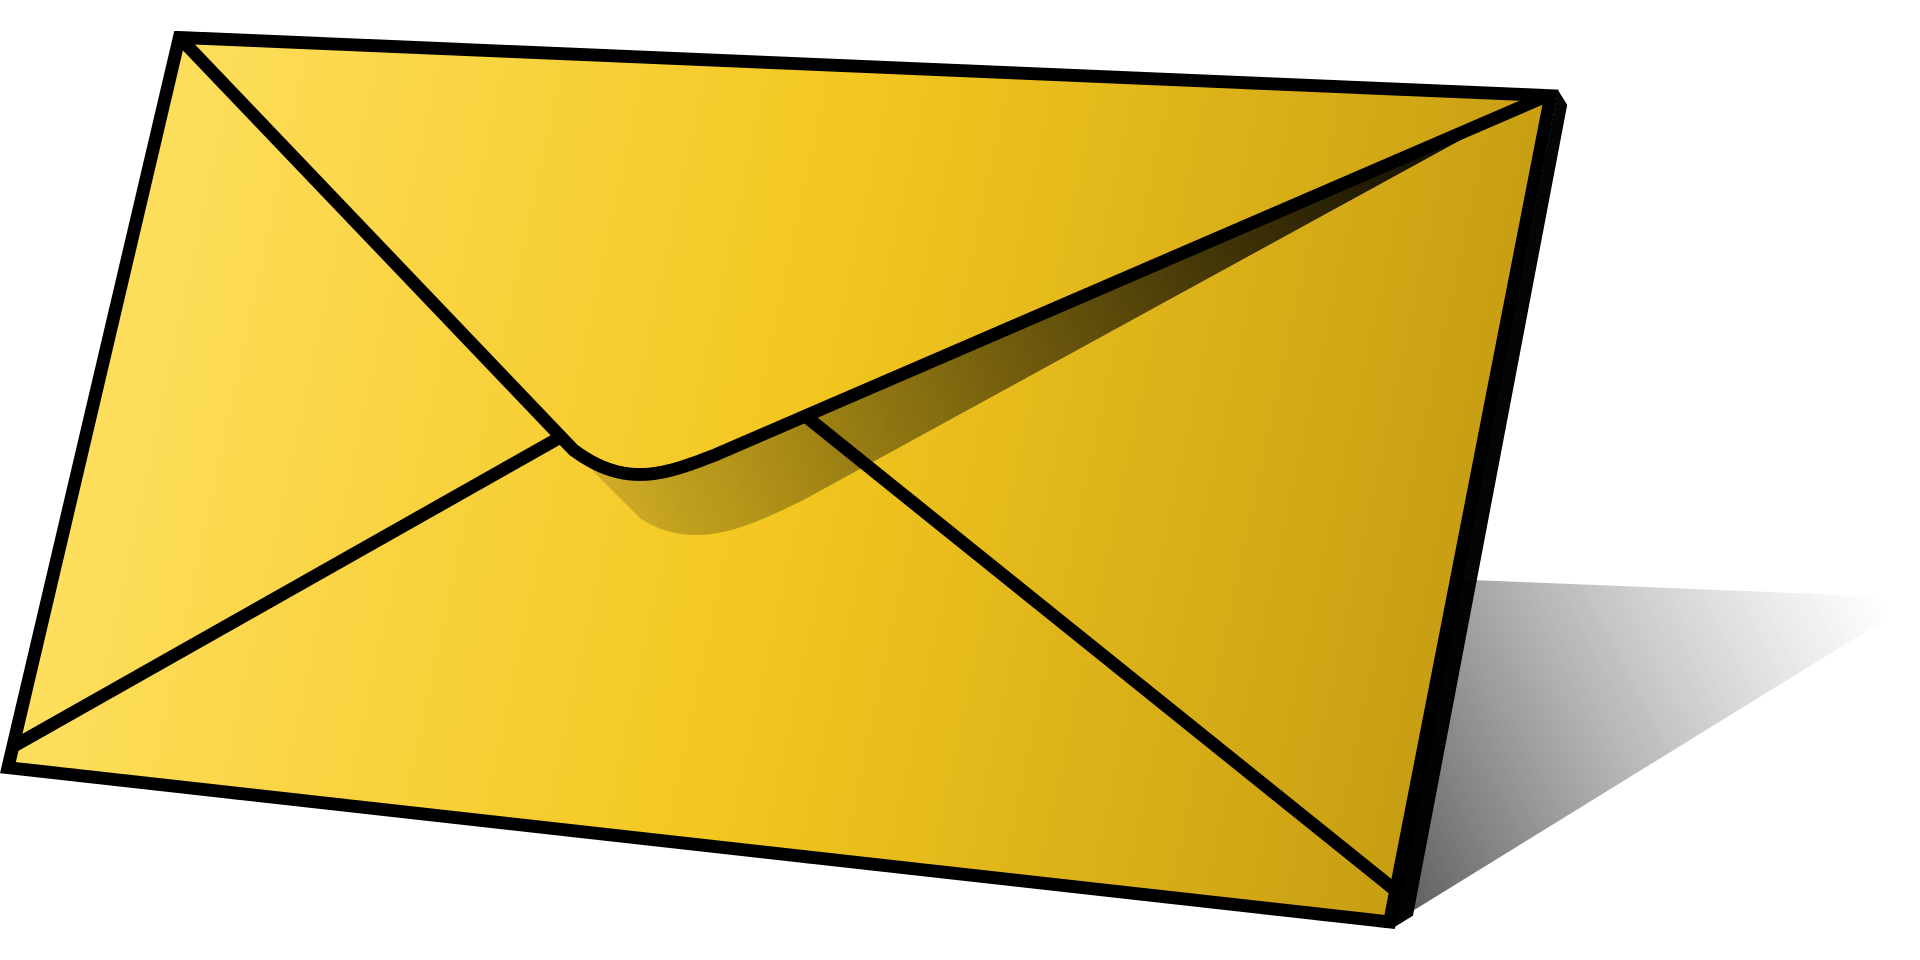 envelope clipart rectangle object